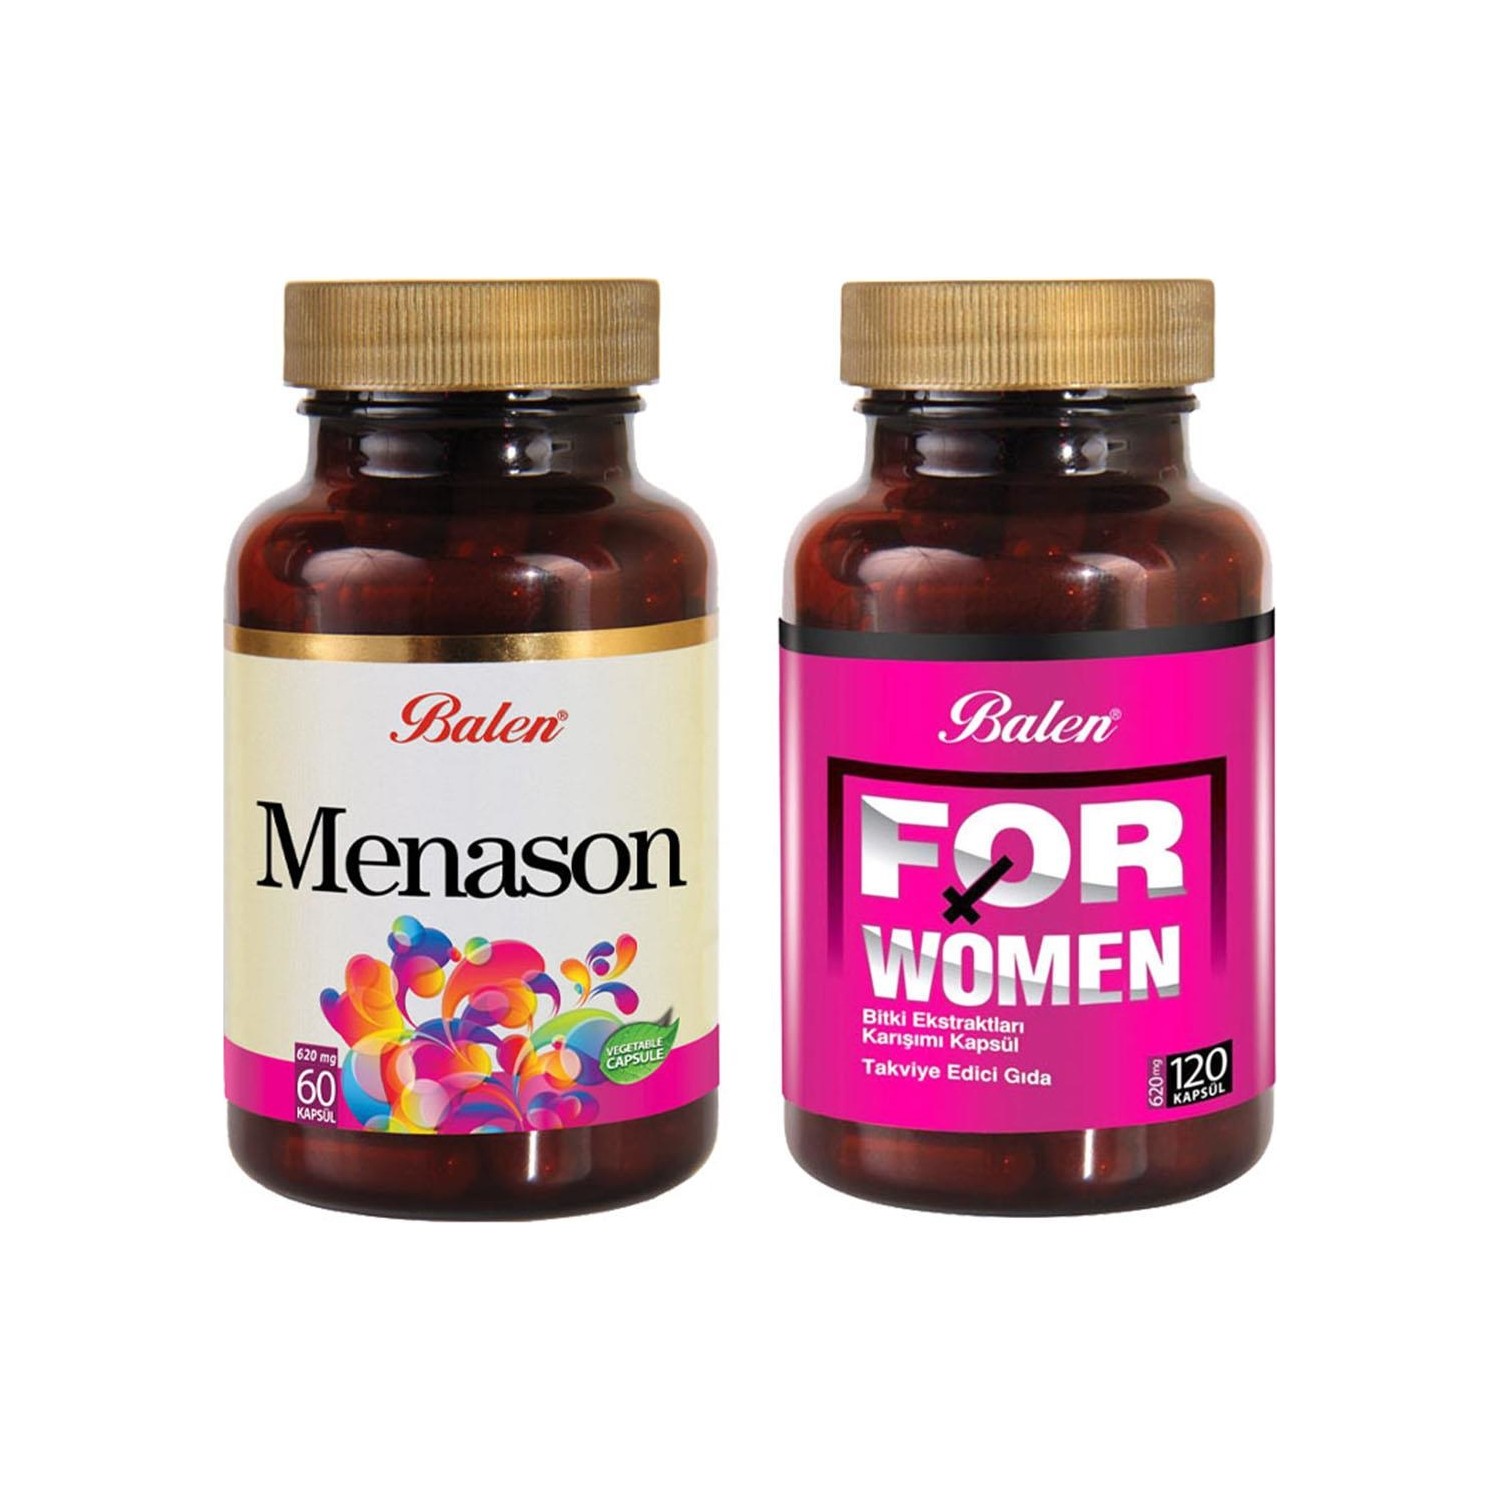 Активная добавка For Woman, 120 капсул, 620 мг + Менасон Balen, 60 капсул, 620 мг